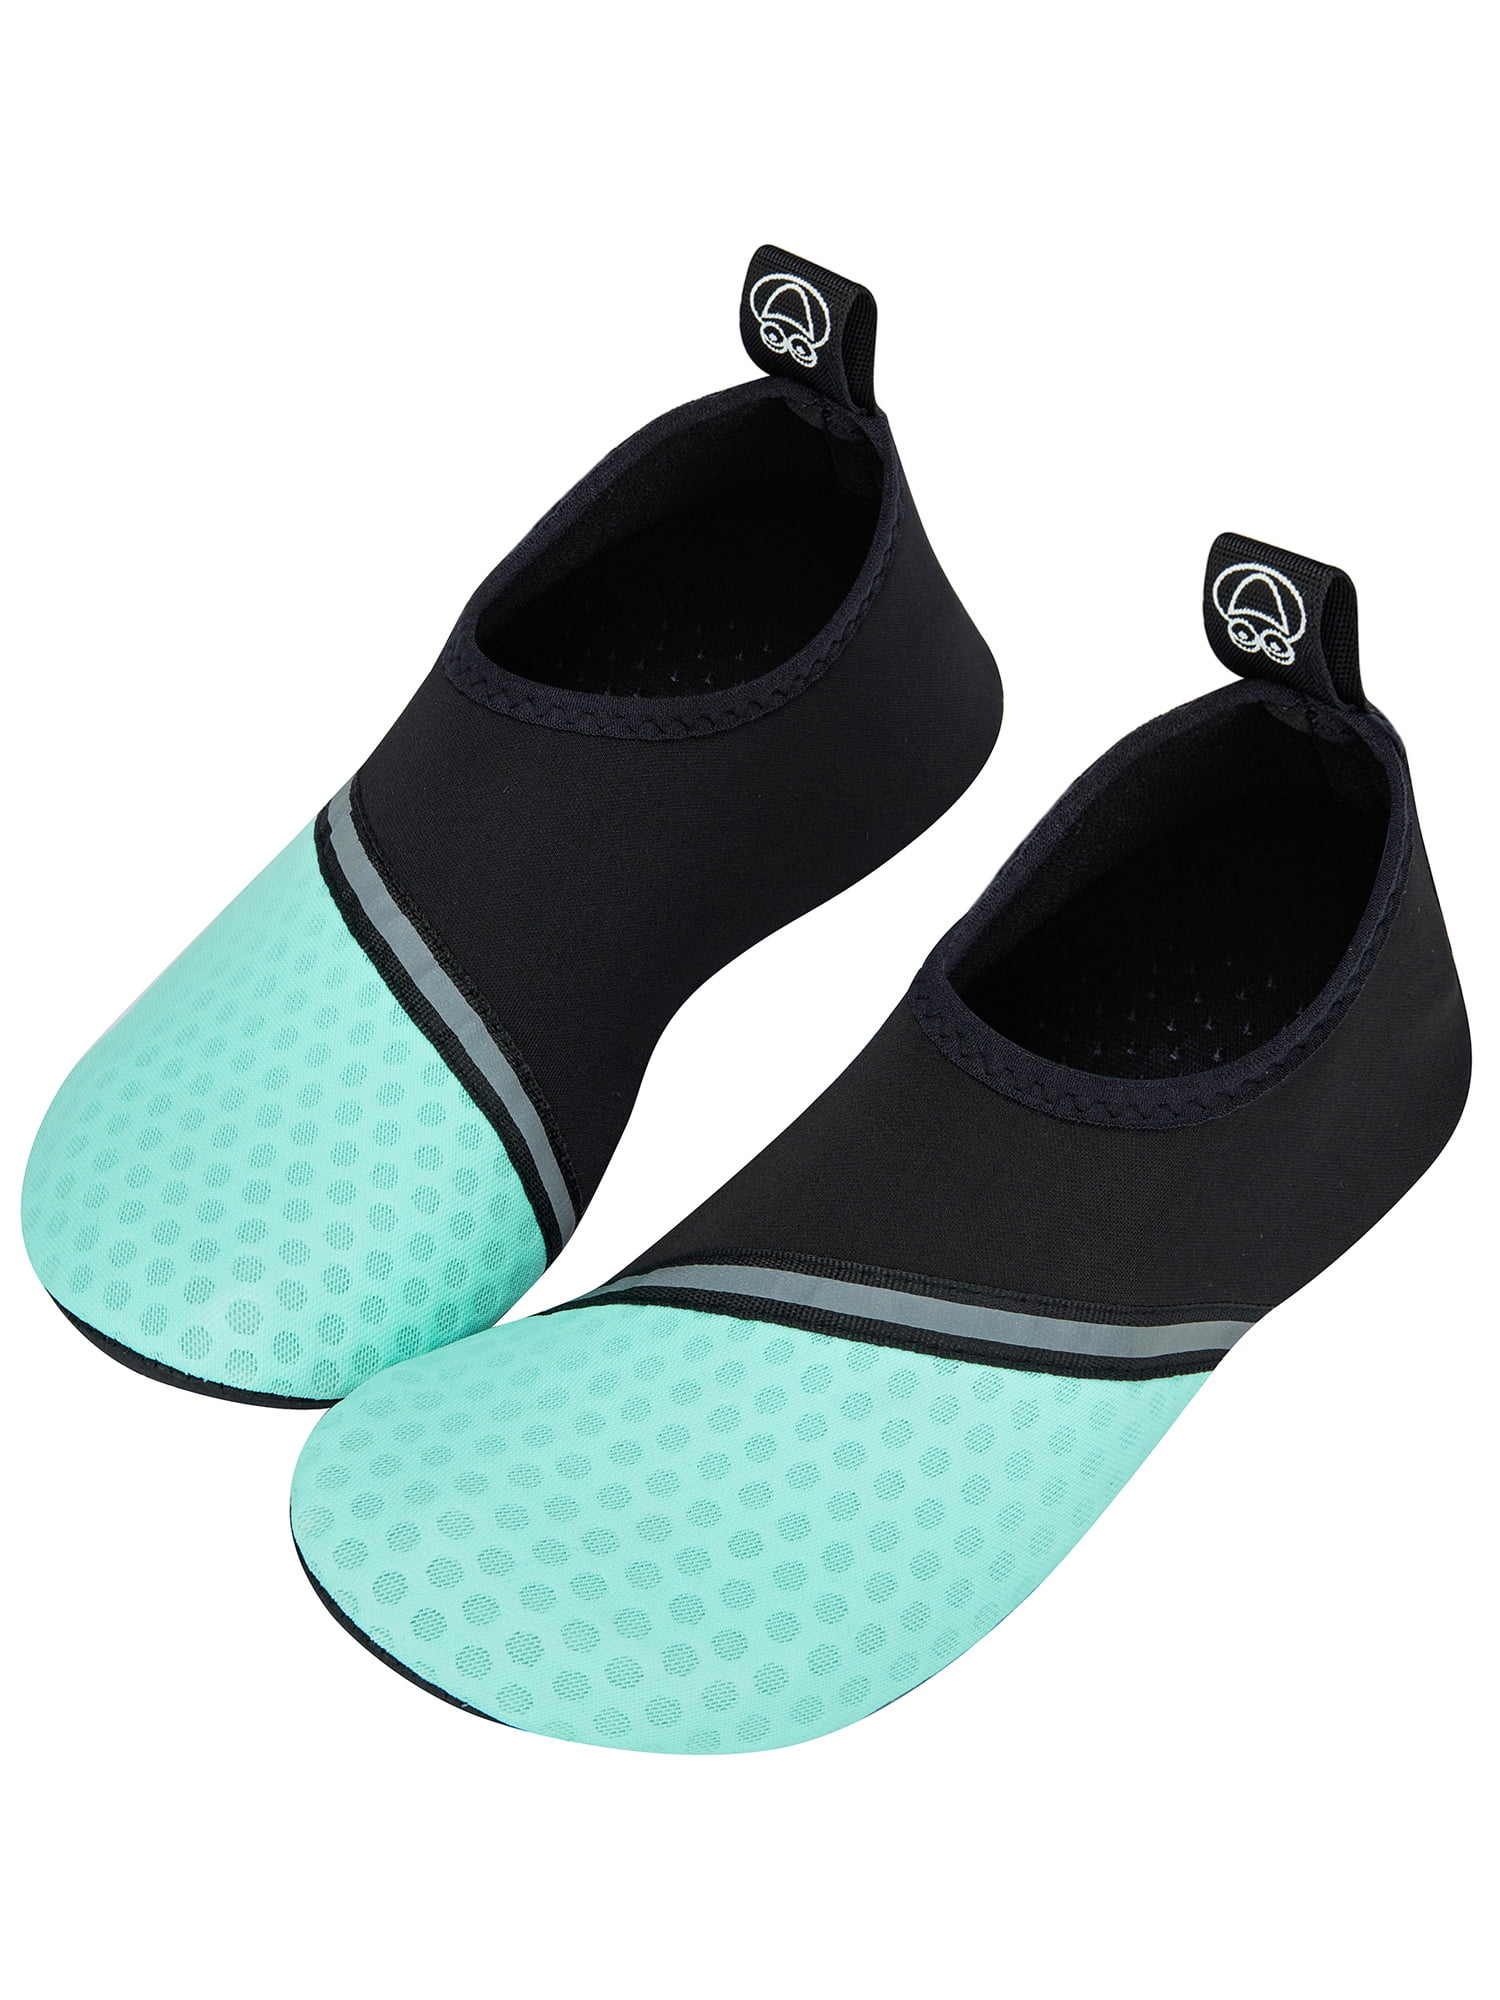 Aqua Water Sports Socks Skin Shoes For Beach Fitness Yoga Scuba Running Gym 